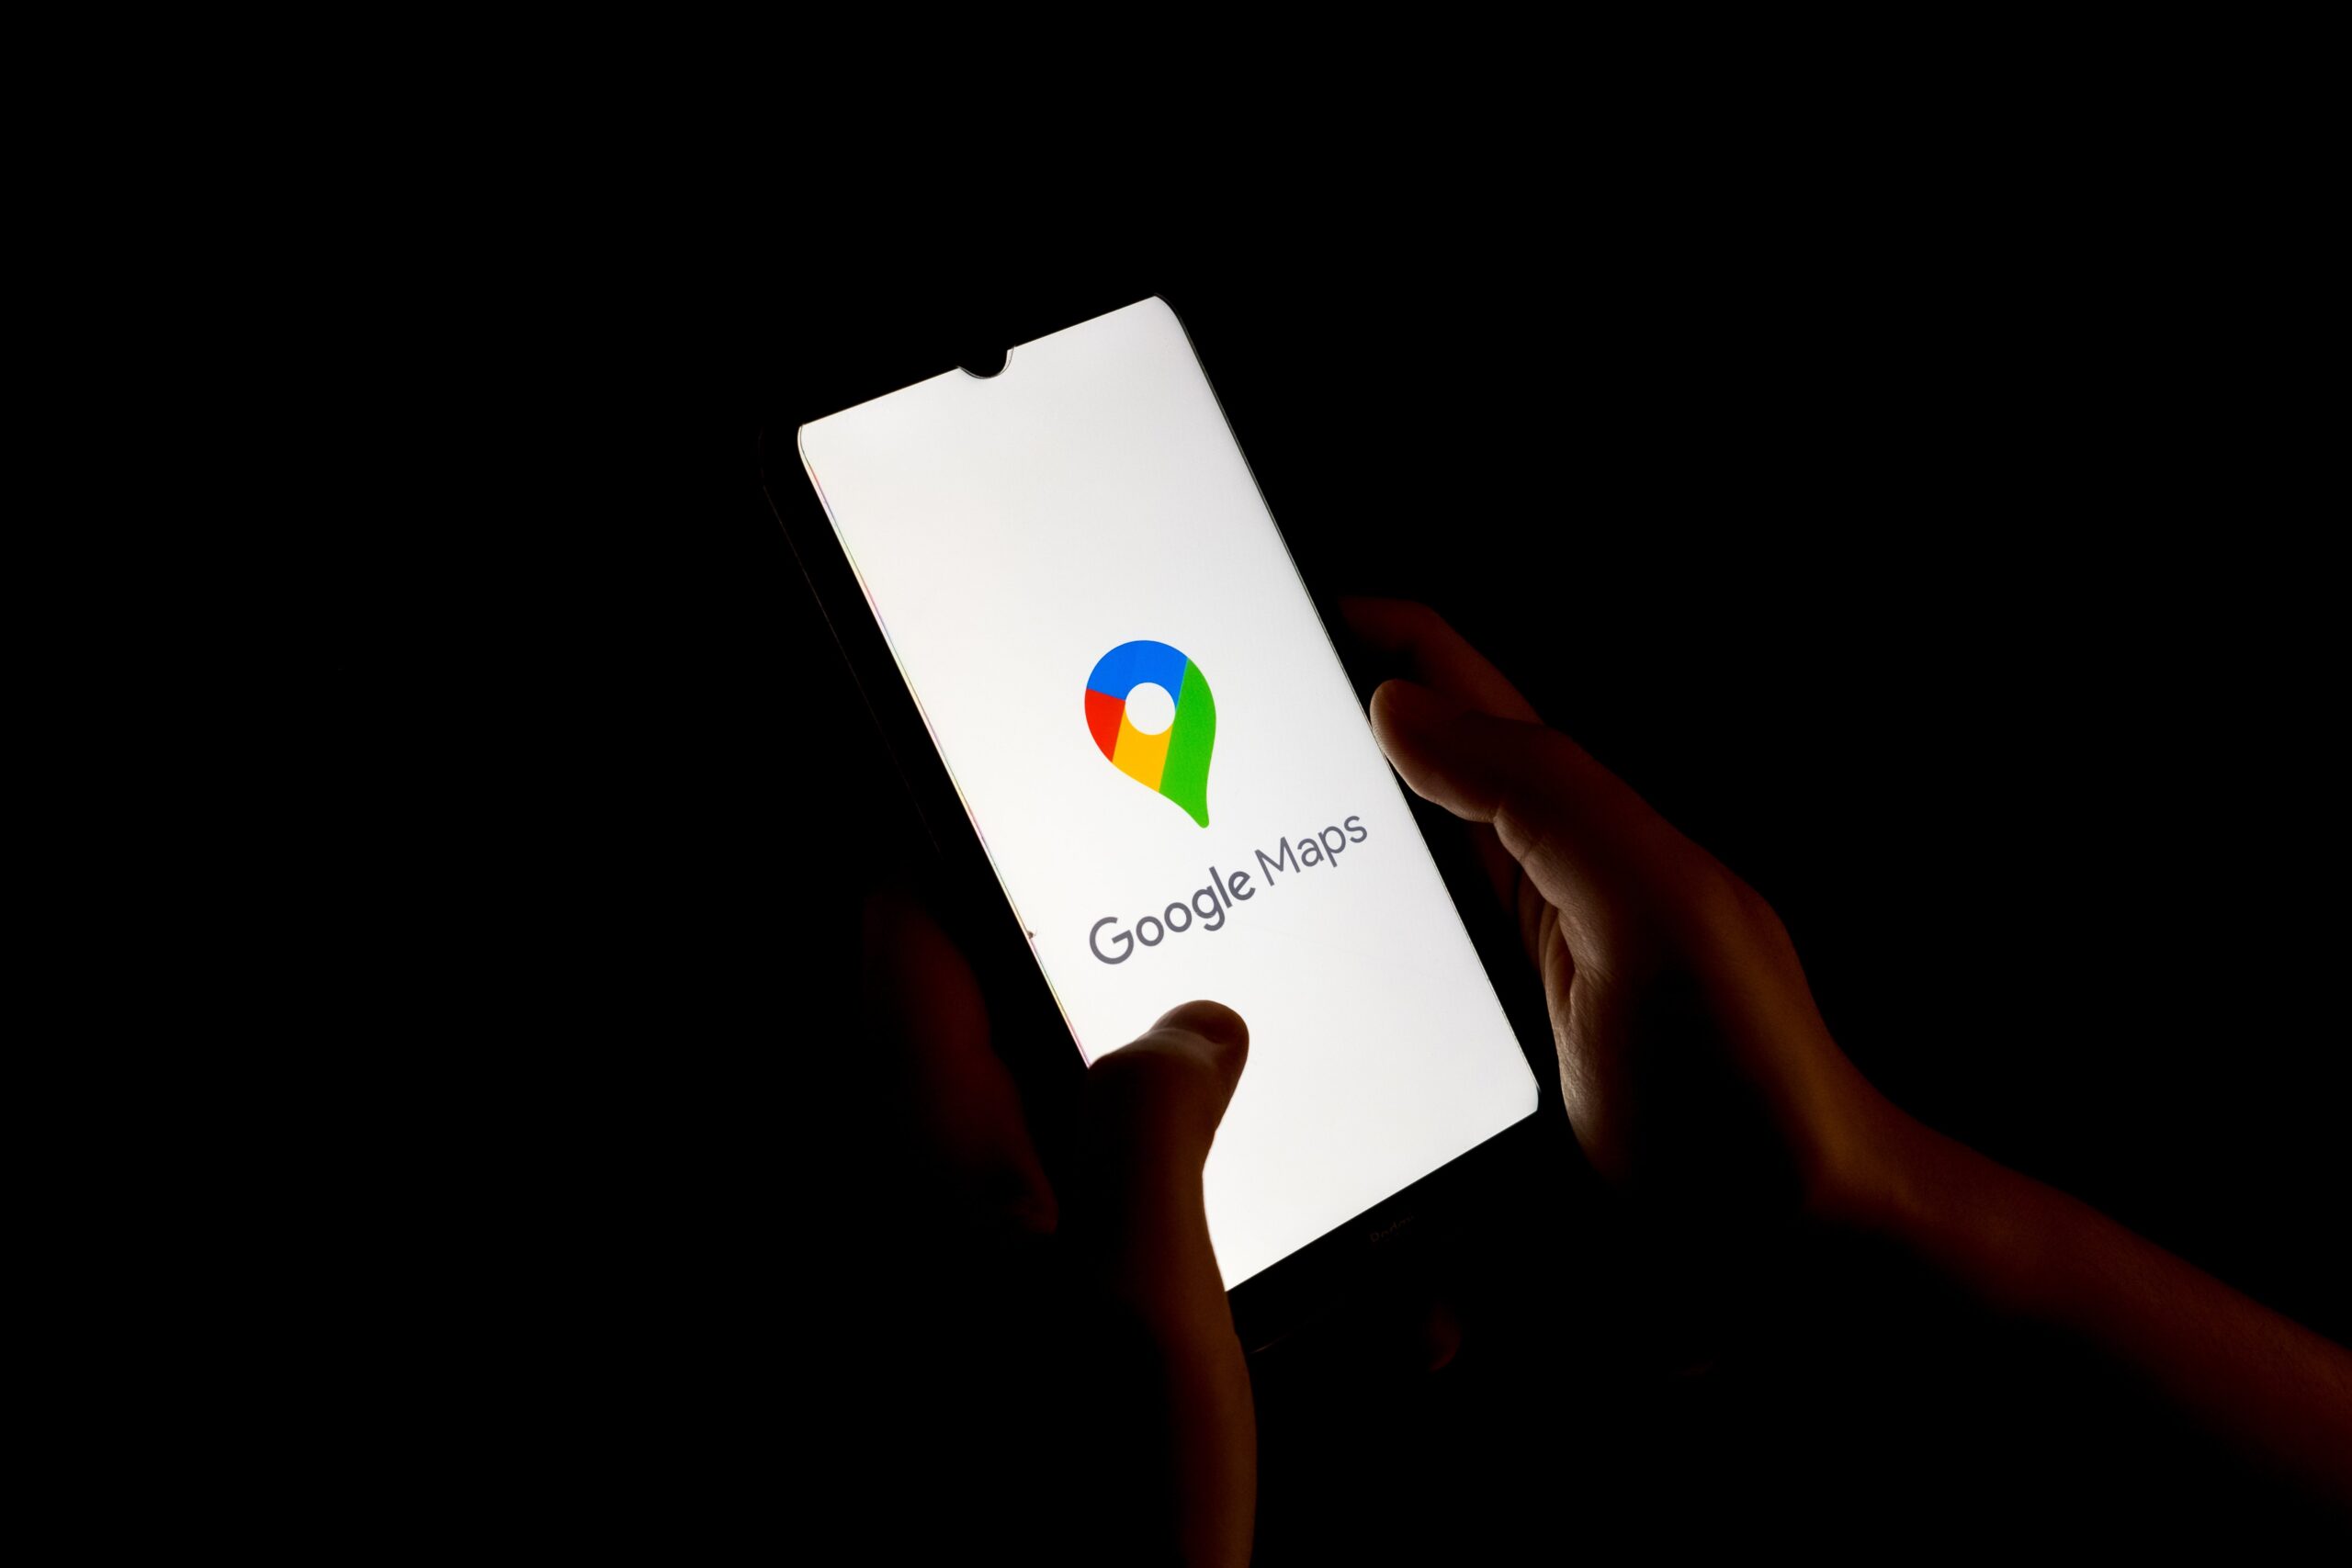 a Google Maps logo seen displayed on a smartphone screen